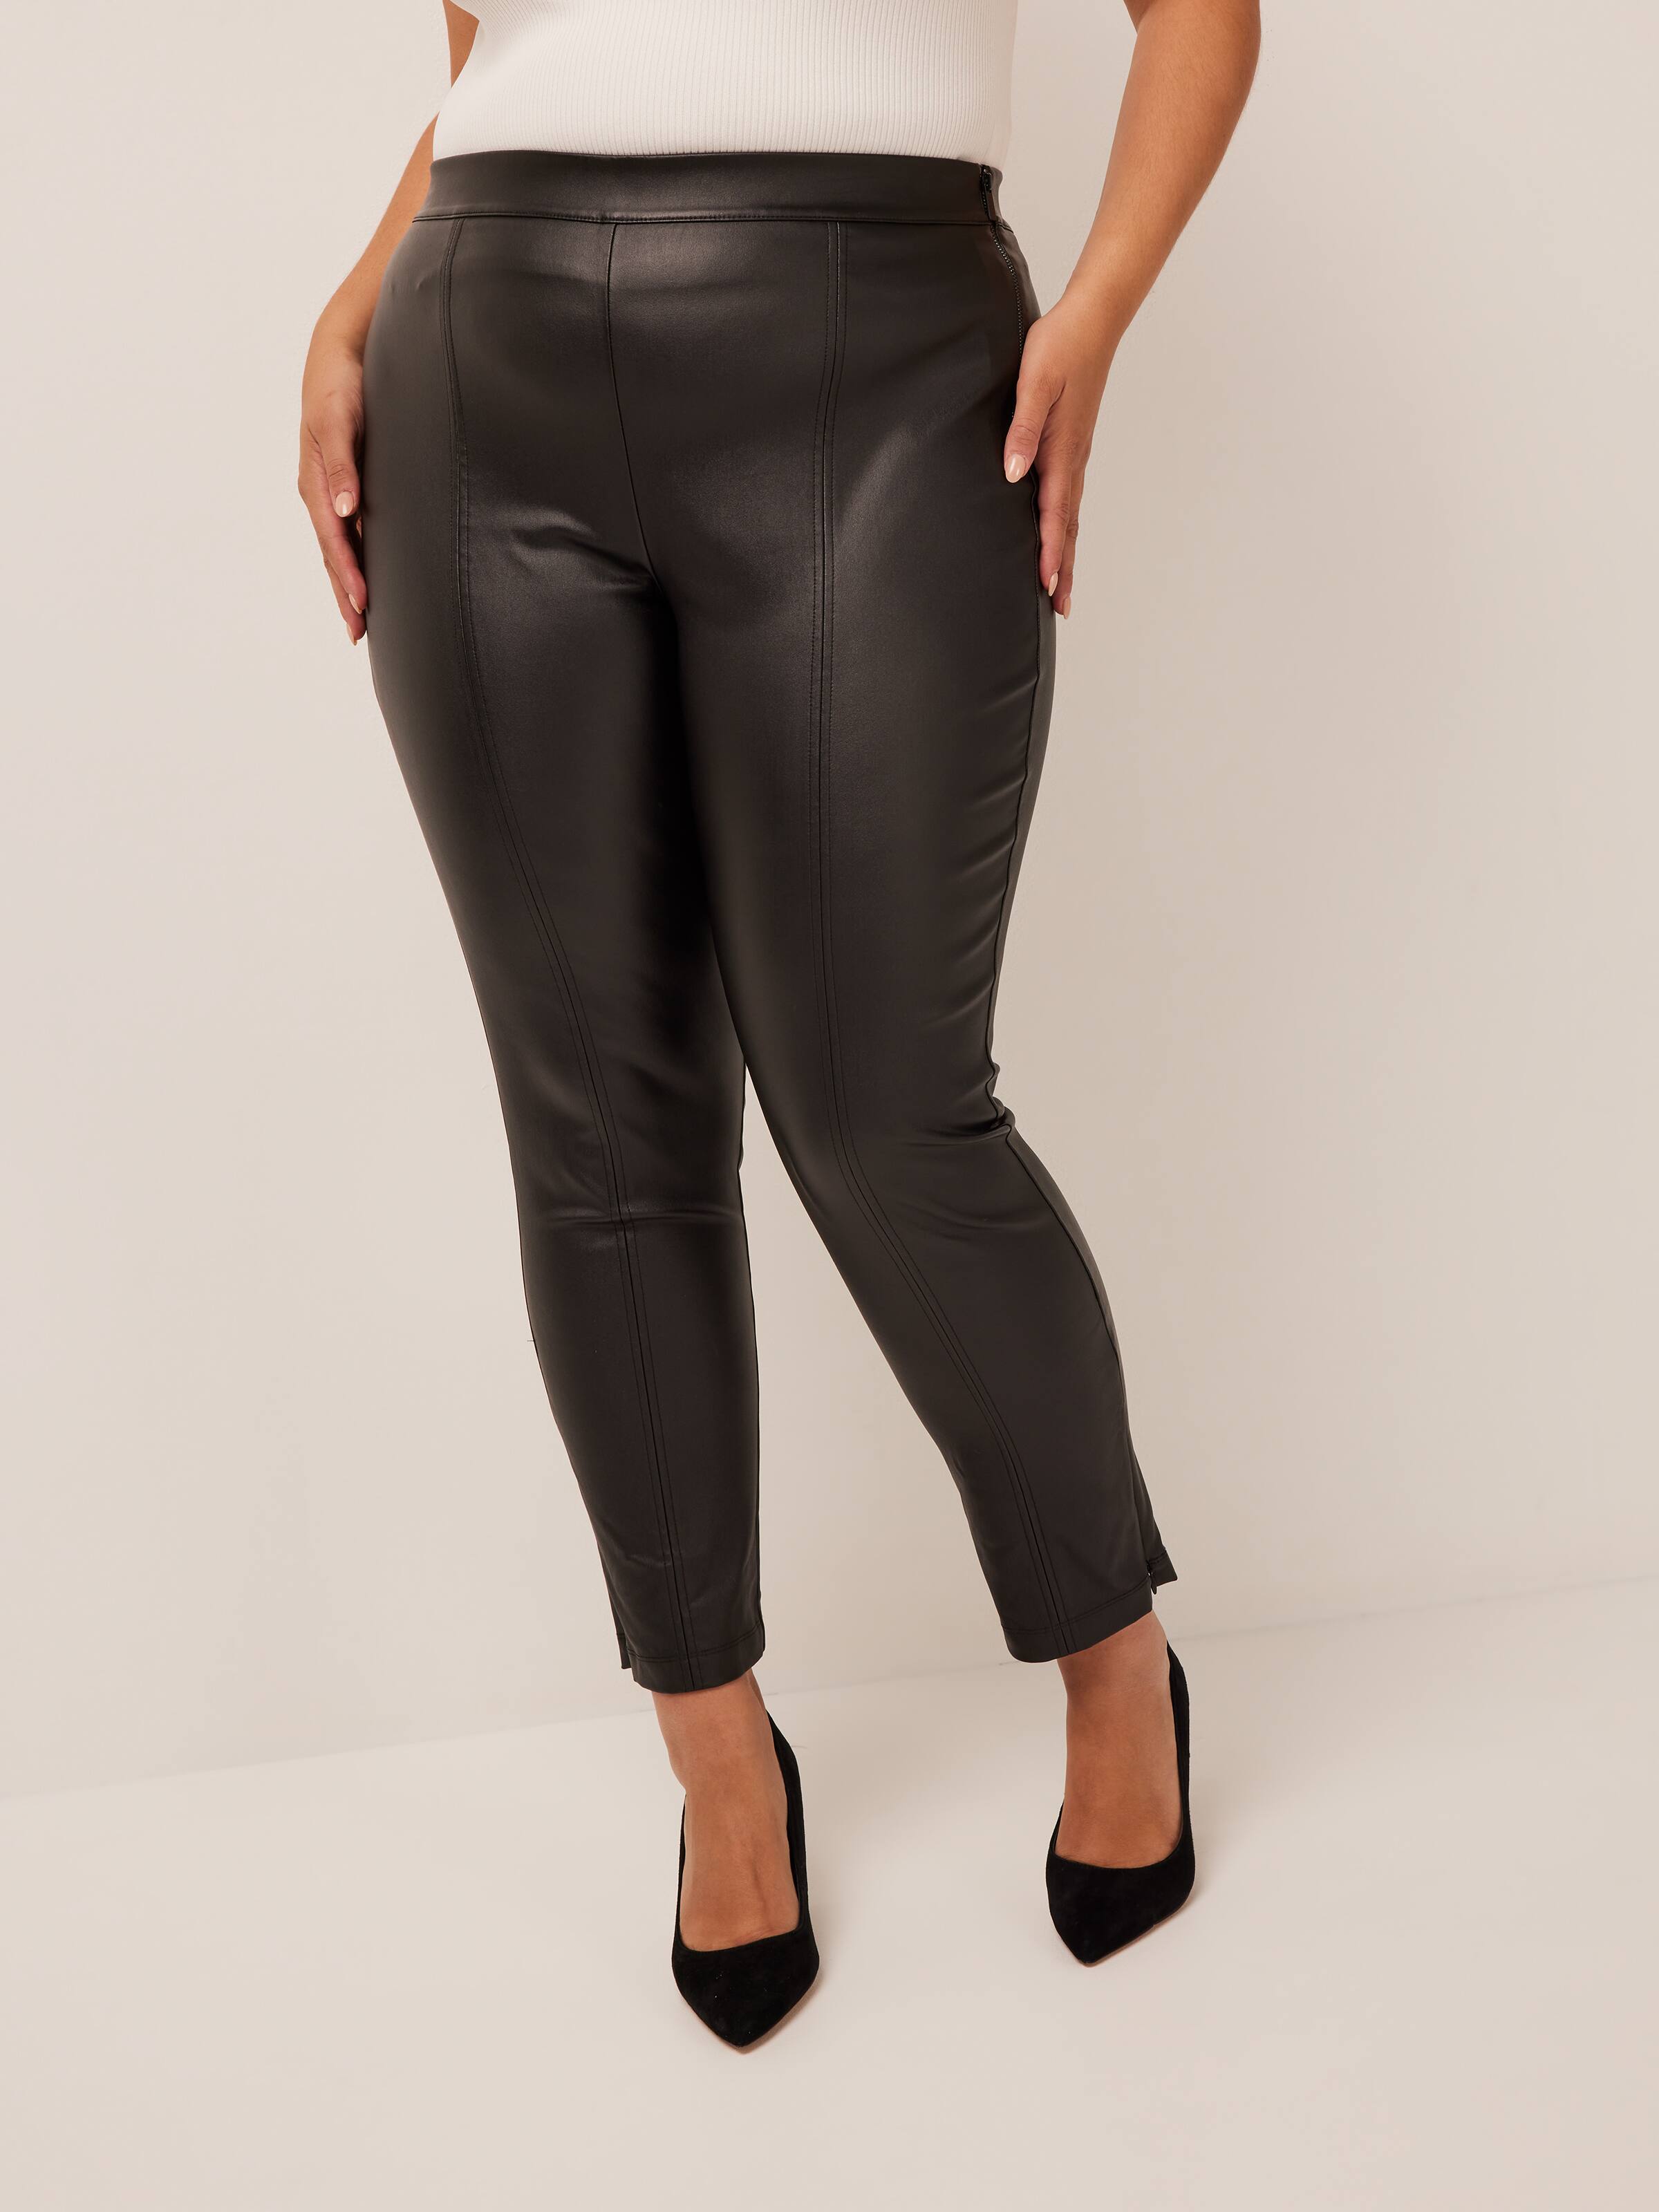 Portmans - Leather Look Coated Jeans on Designer Wardrobe